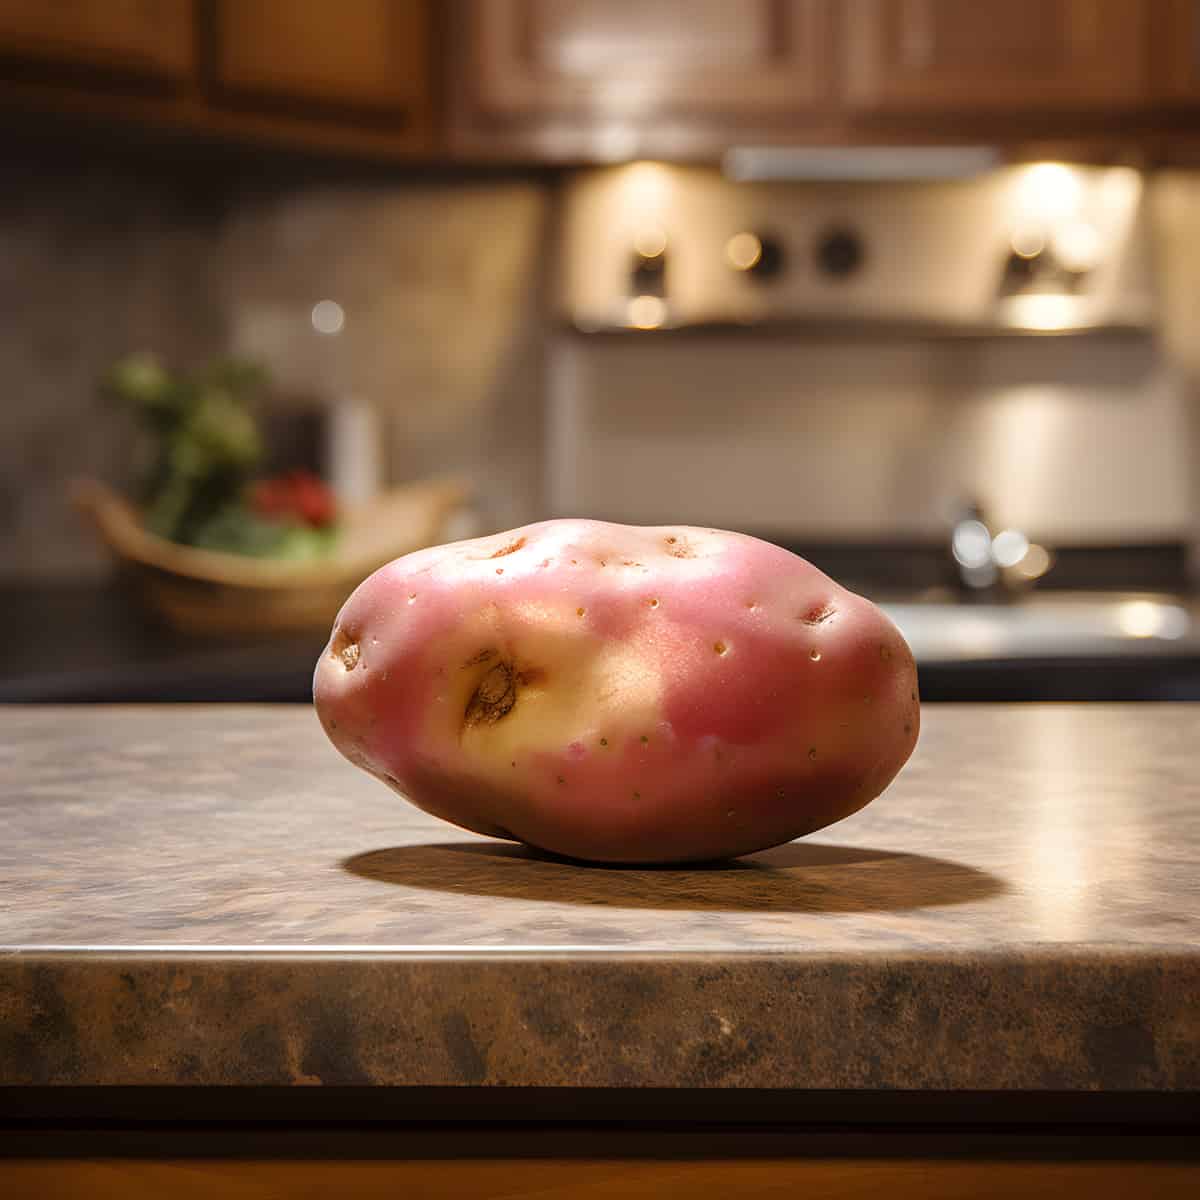 Ruby Lou Potatoes on a kitchen counter